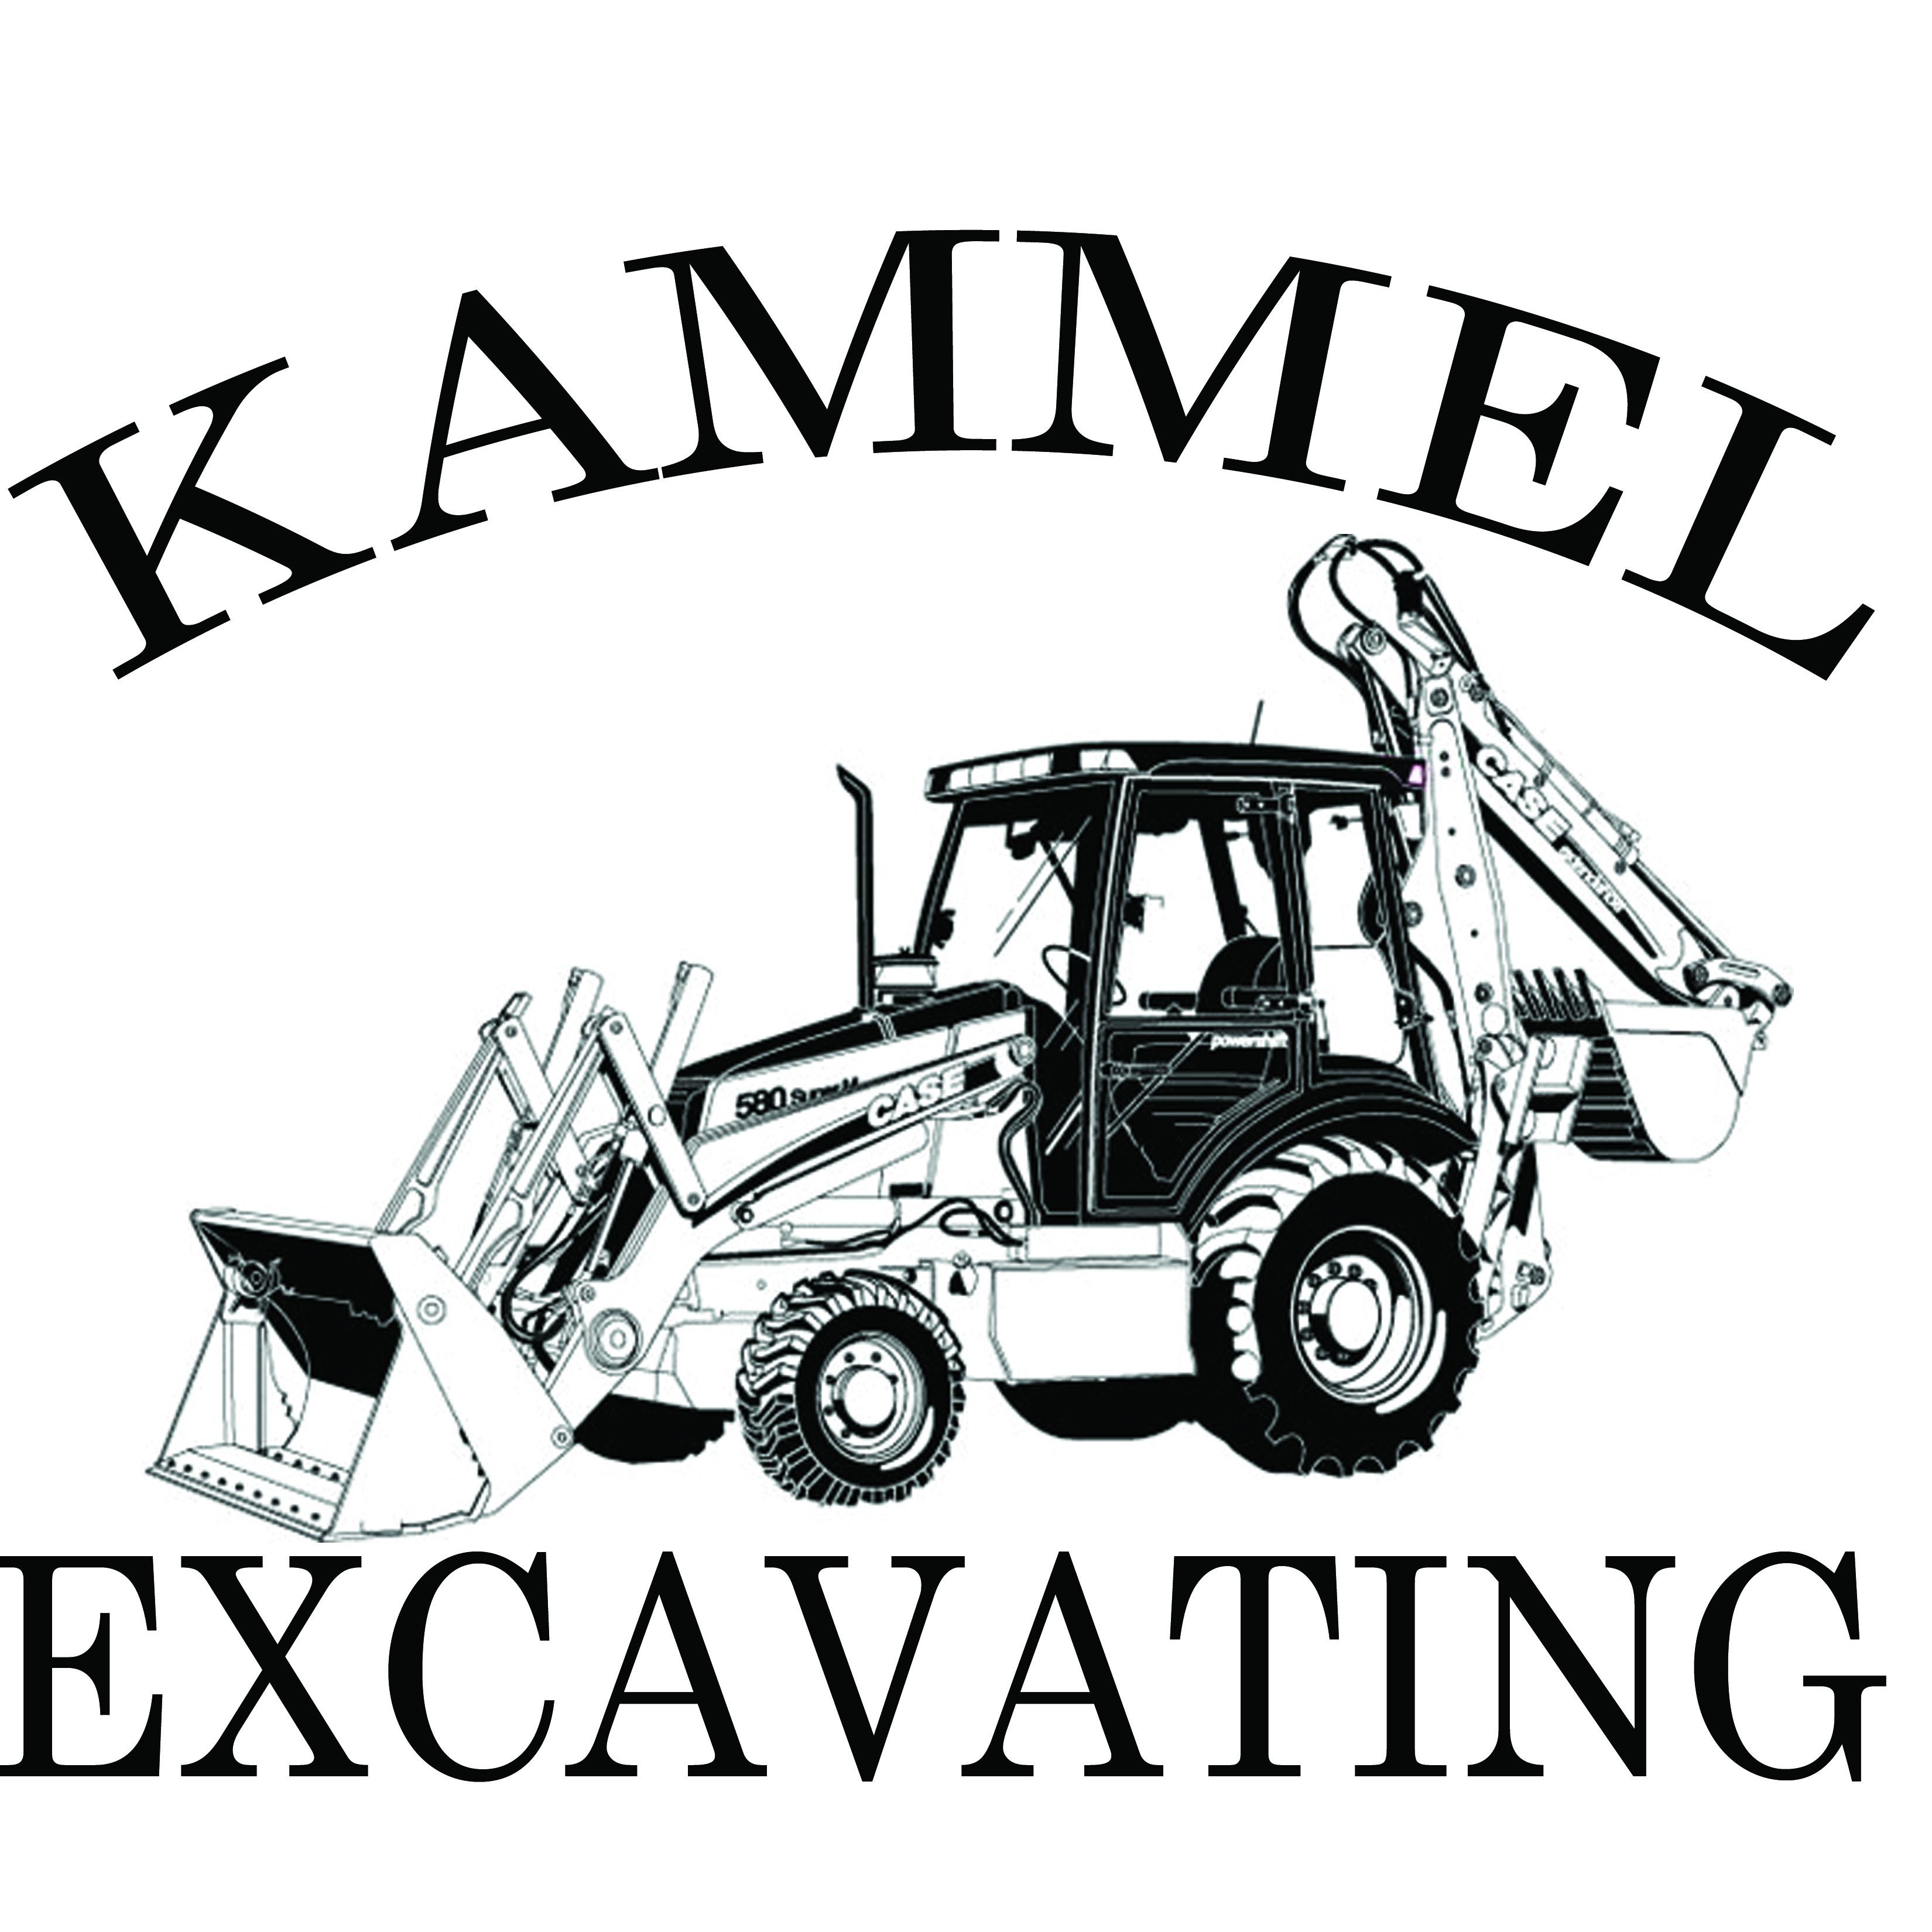 Kammel Excavating, Inc. Logo